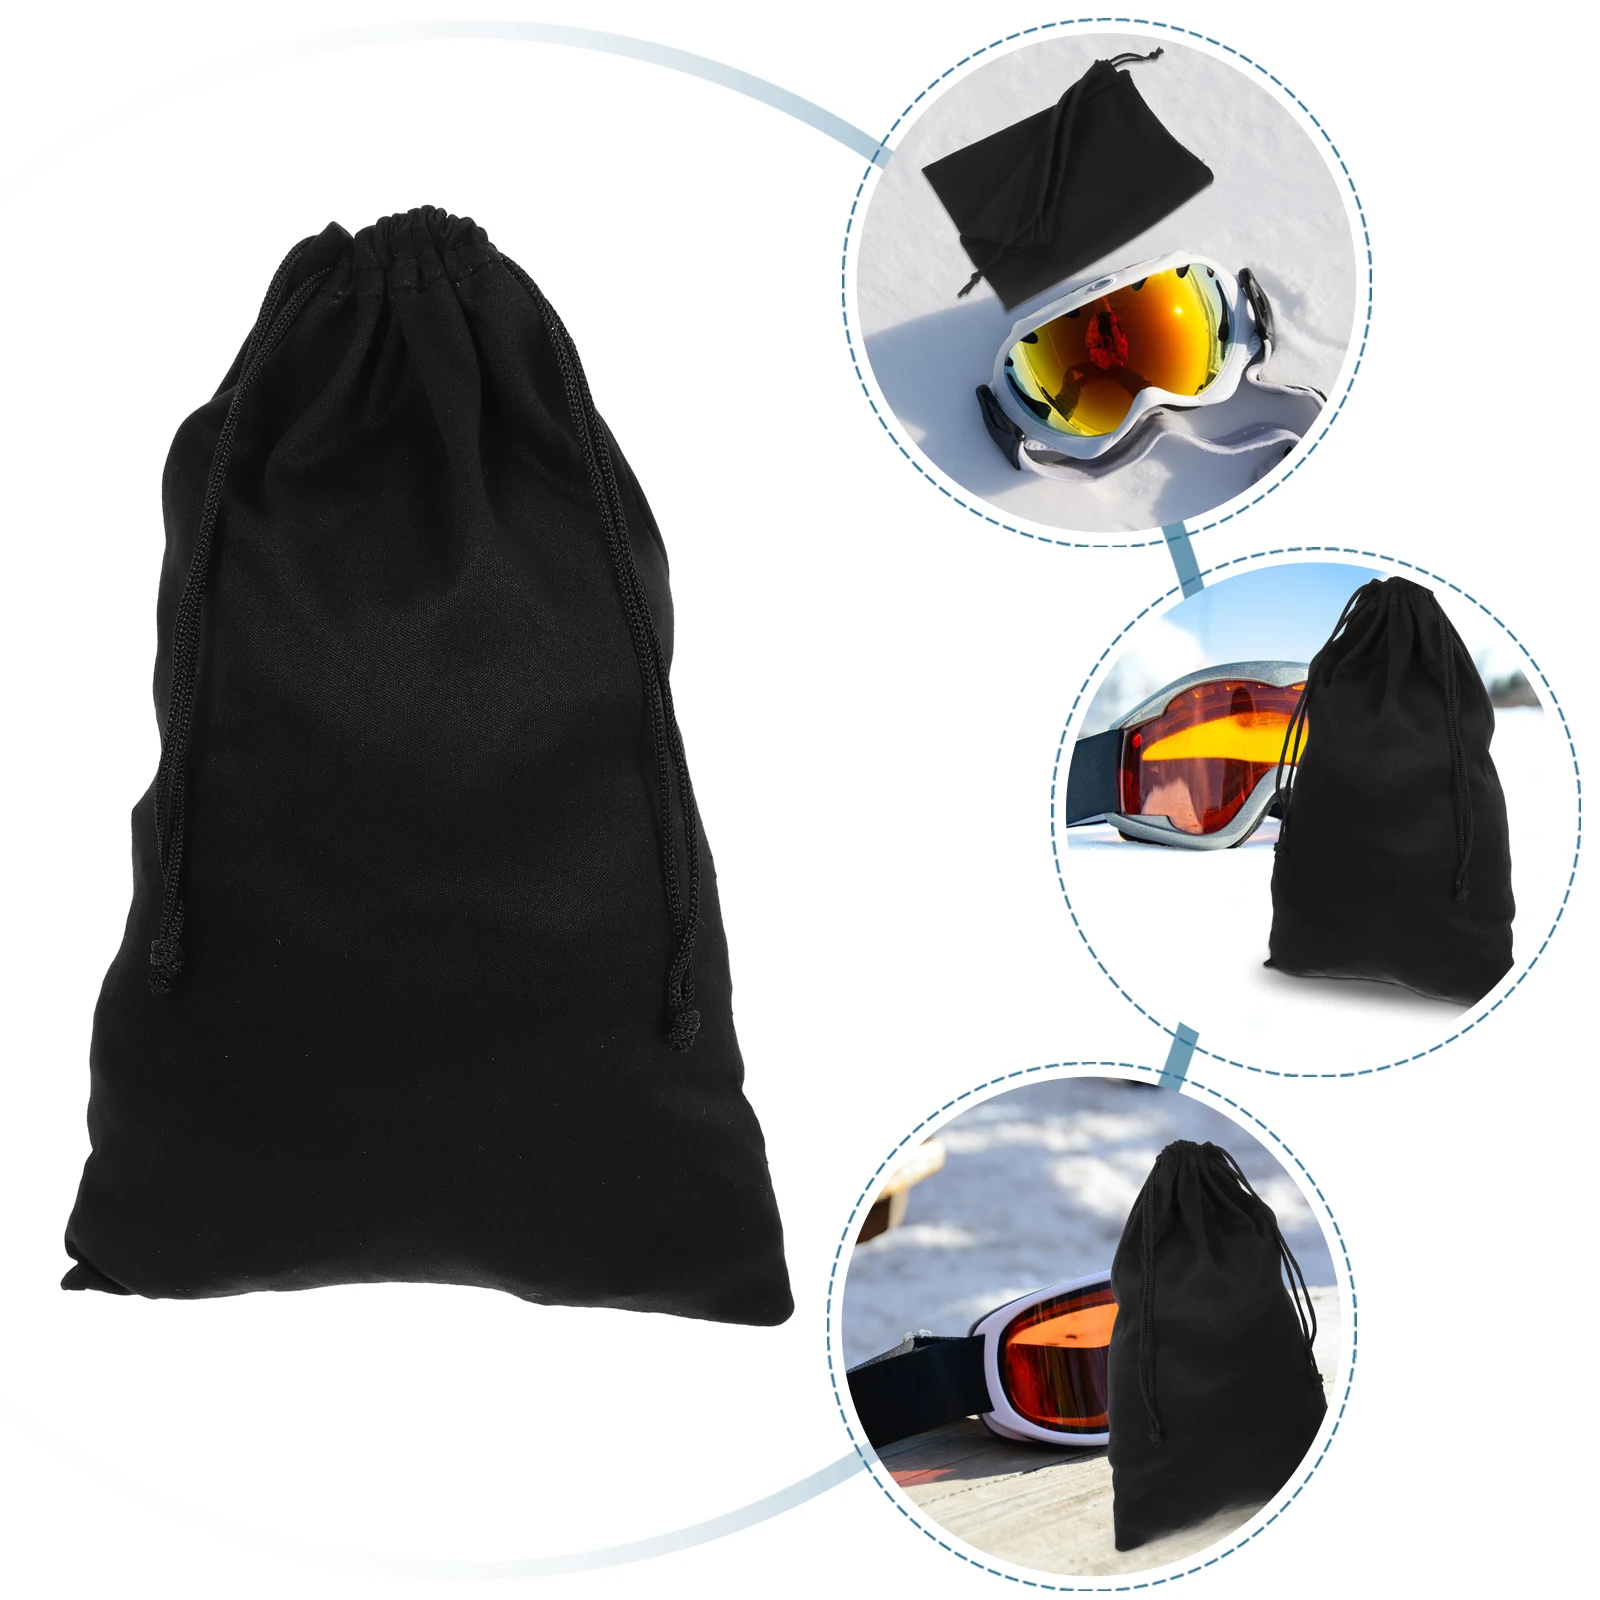 

10 Pcs Shot Glasses Protection Bags Jacket Ski Goggle Drawstring Pocket Soft Bag Flannel for Snow Goggles Ski Mask Carrying